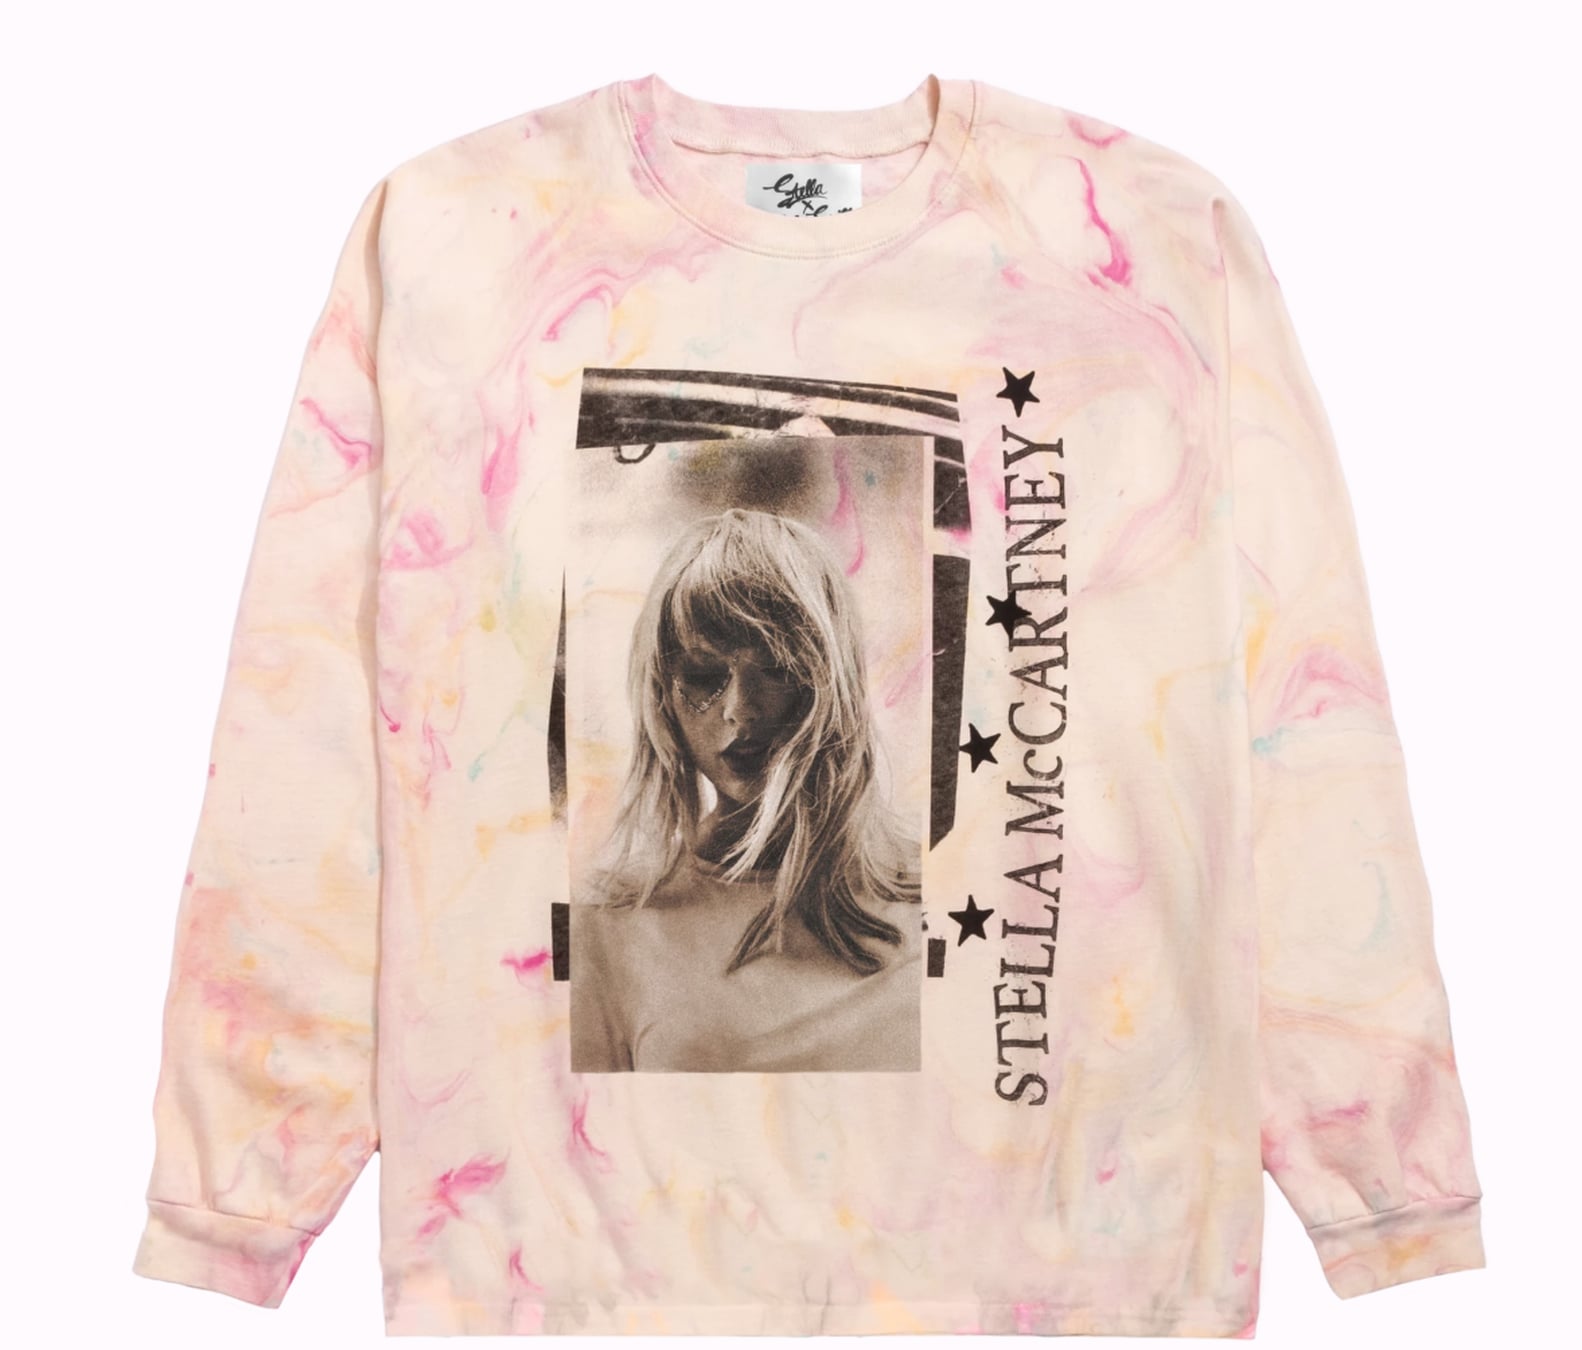 Taylor Swift Stella McCartney Collaboration | POPSUGAR Fashion